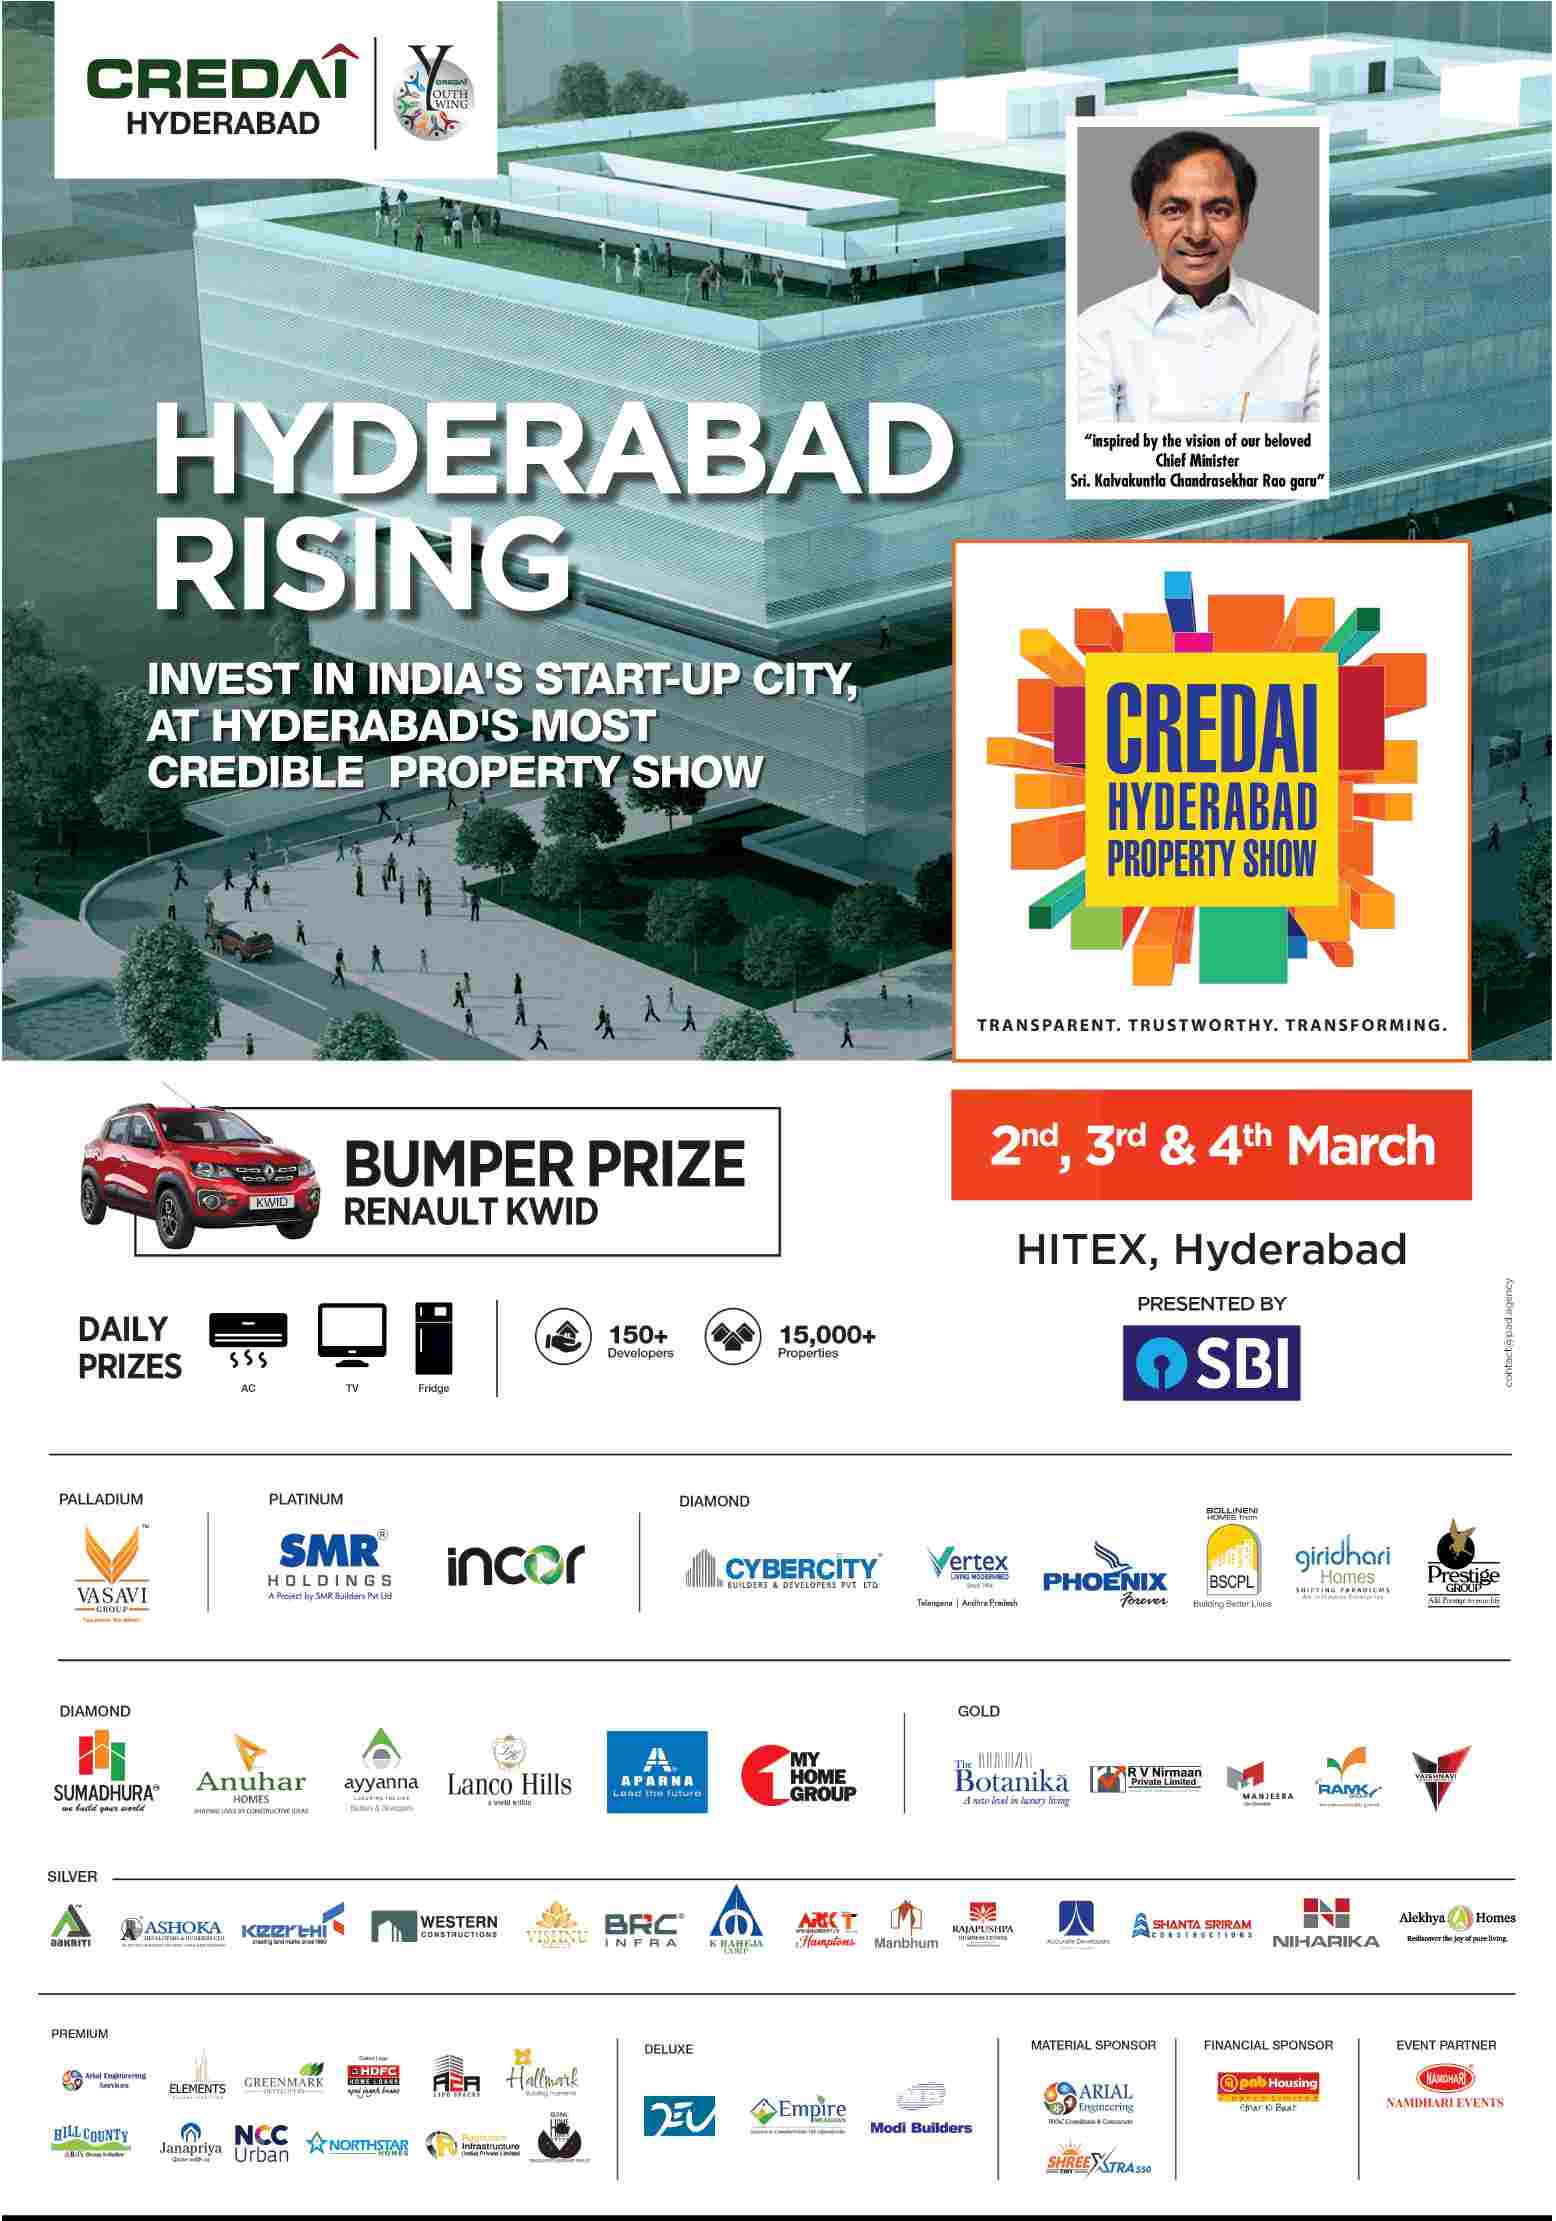 CREDAI Hyderabad Property Expo 2018 Update